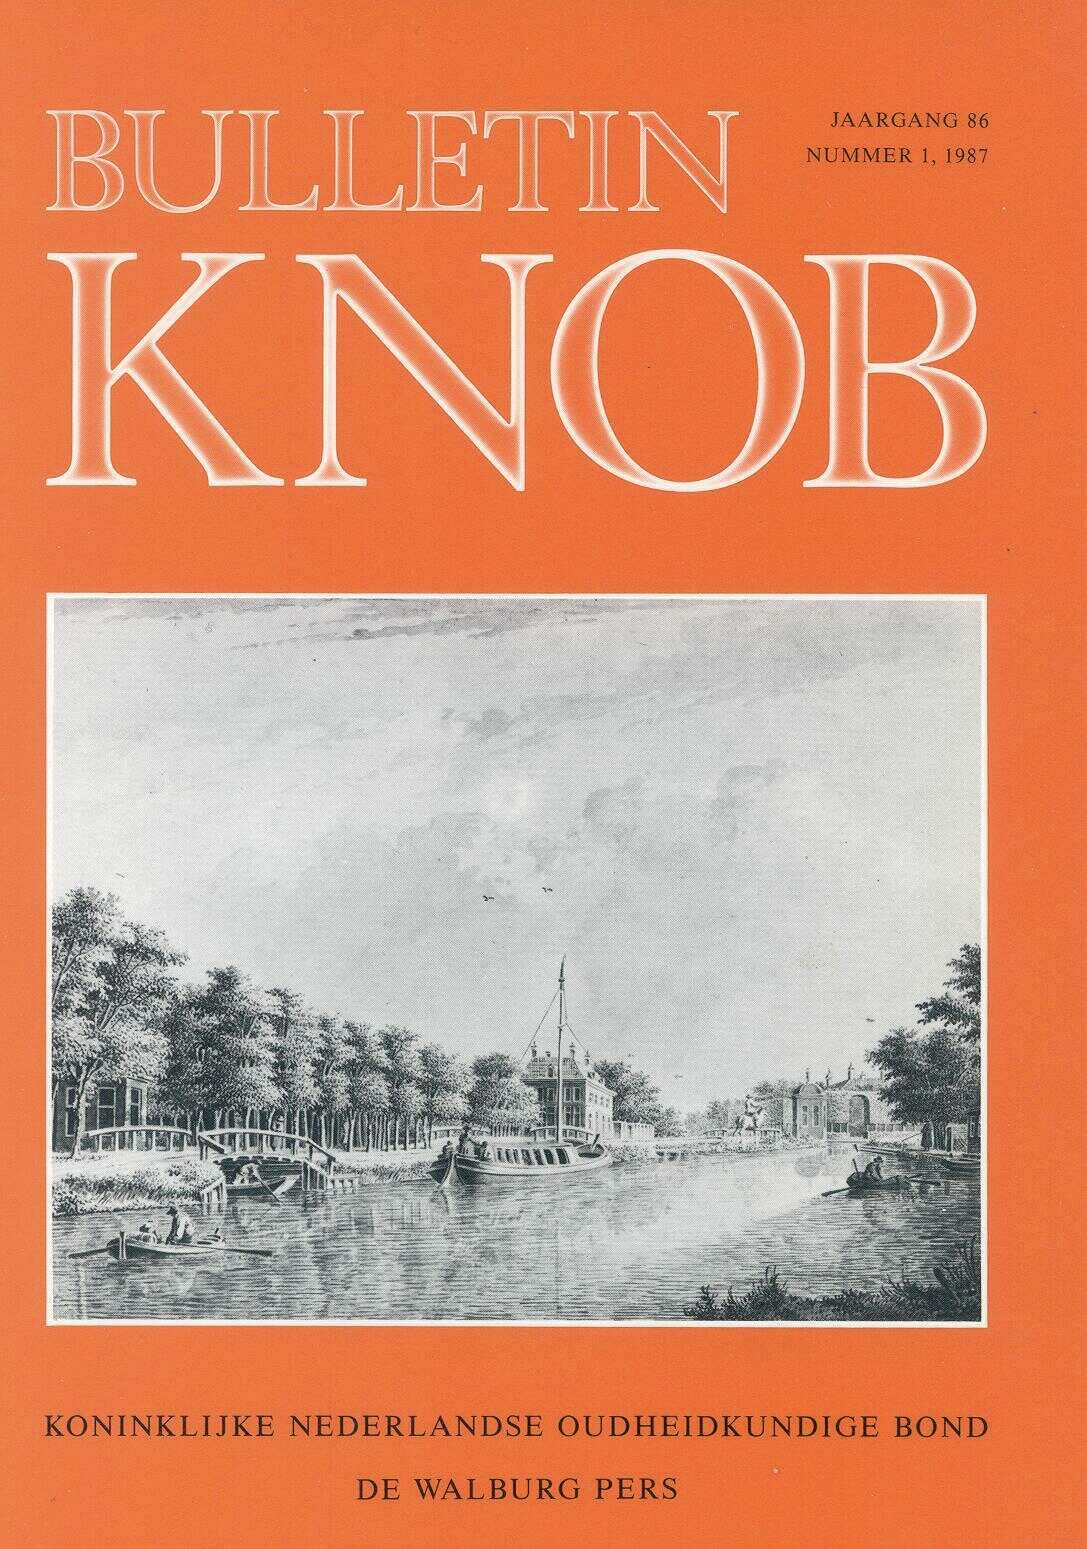 						View Bulletin KNOB 86 (1987) 1
					